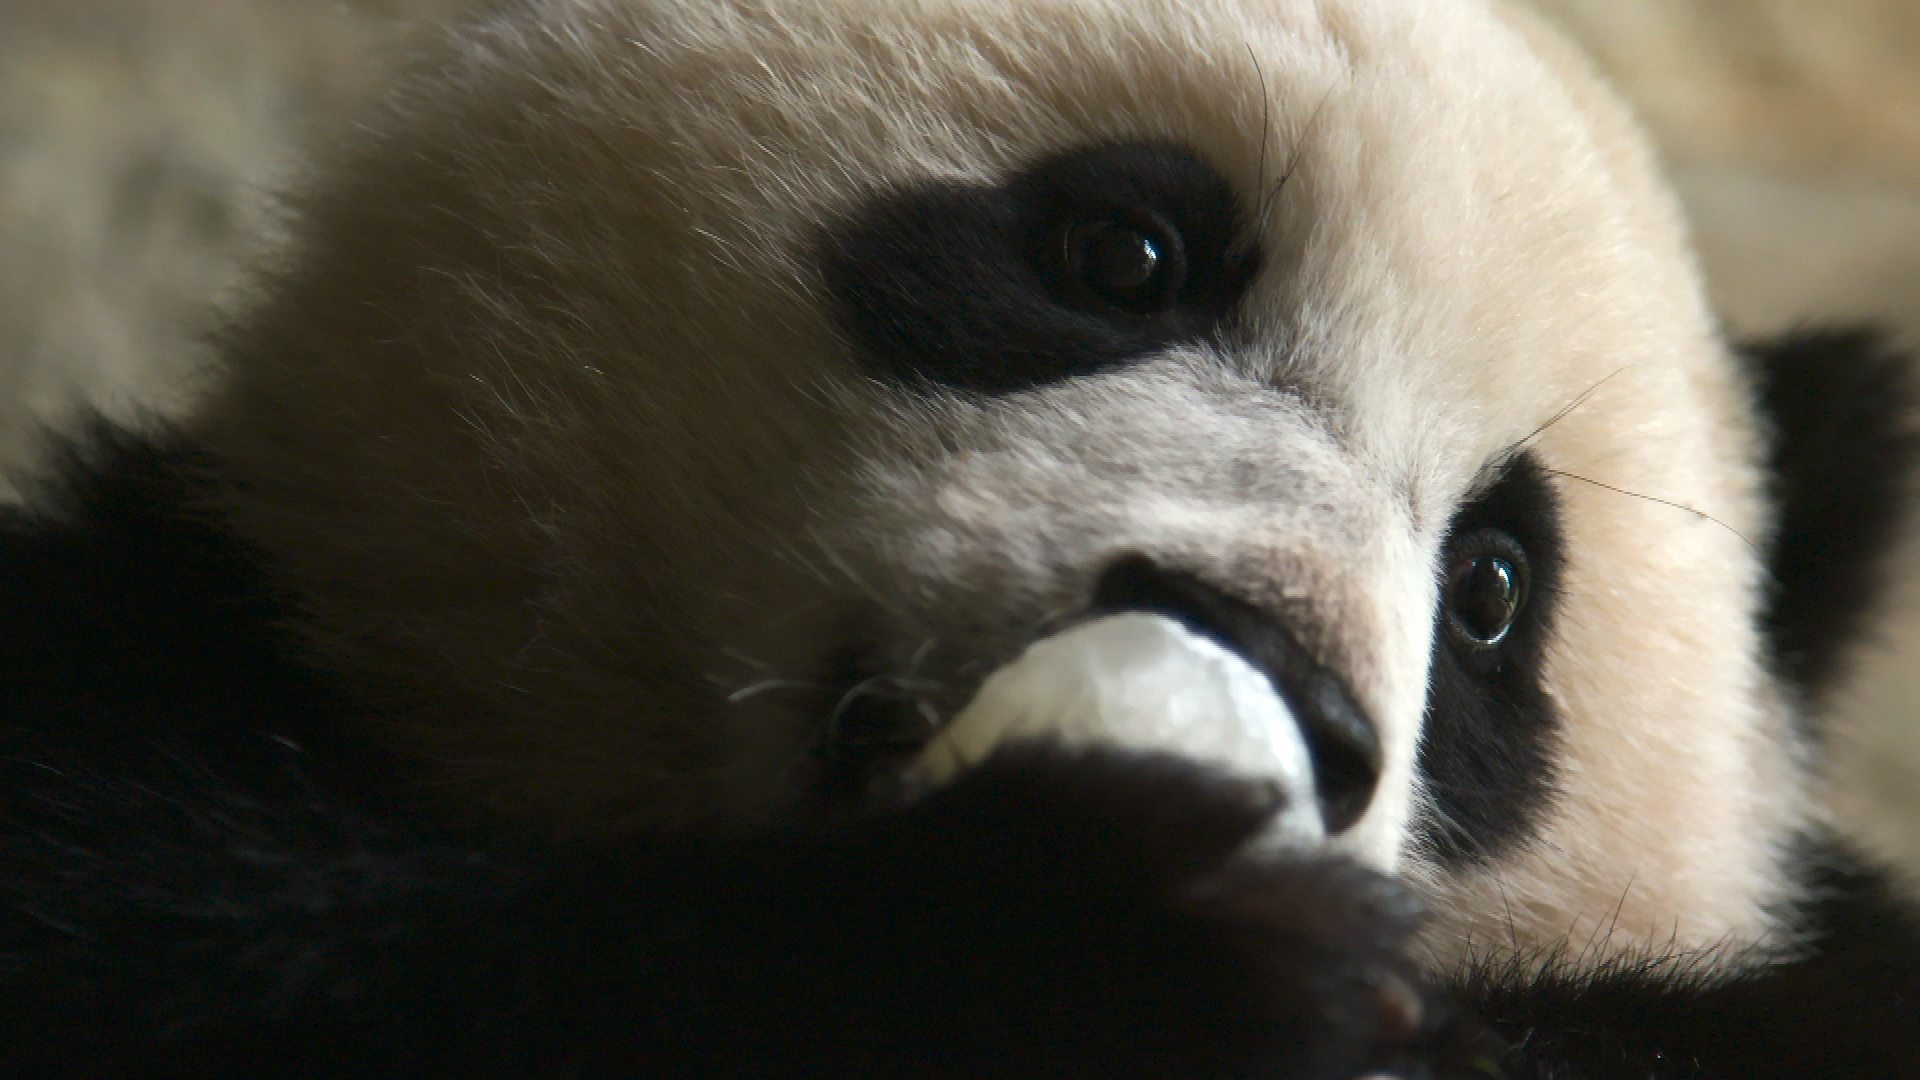 BBC One - Super Cute Animals - Giant panda